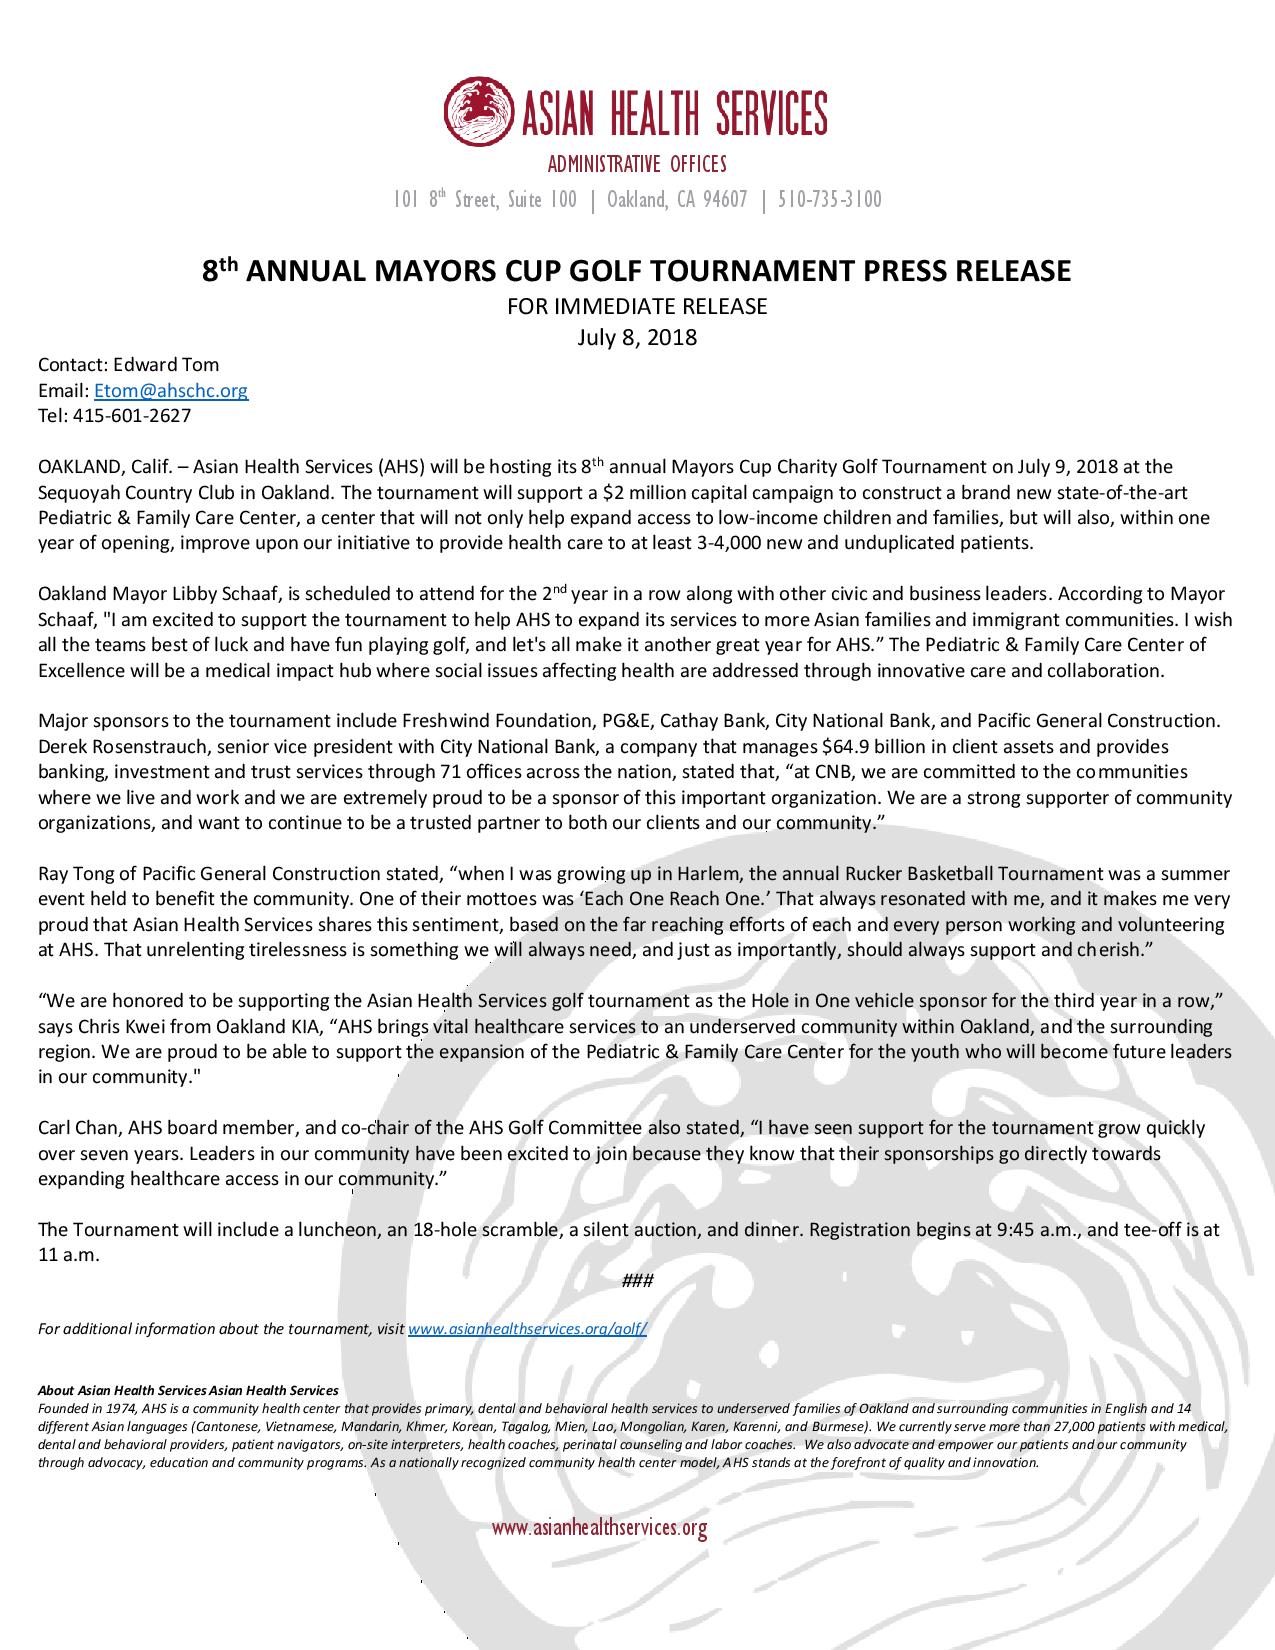 AHS Golf 2018 Press Release FINAL-page-001.jpg